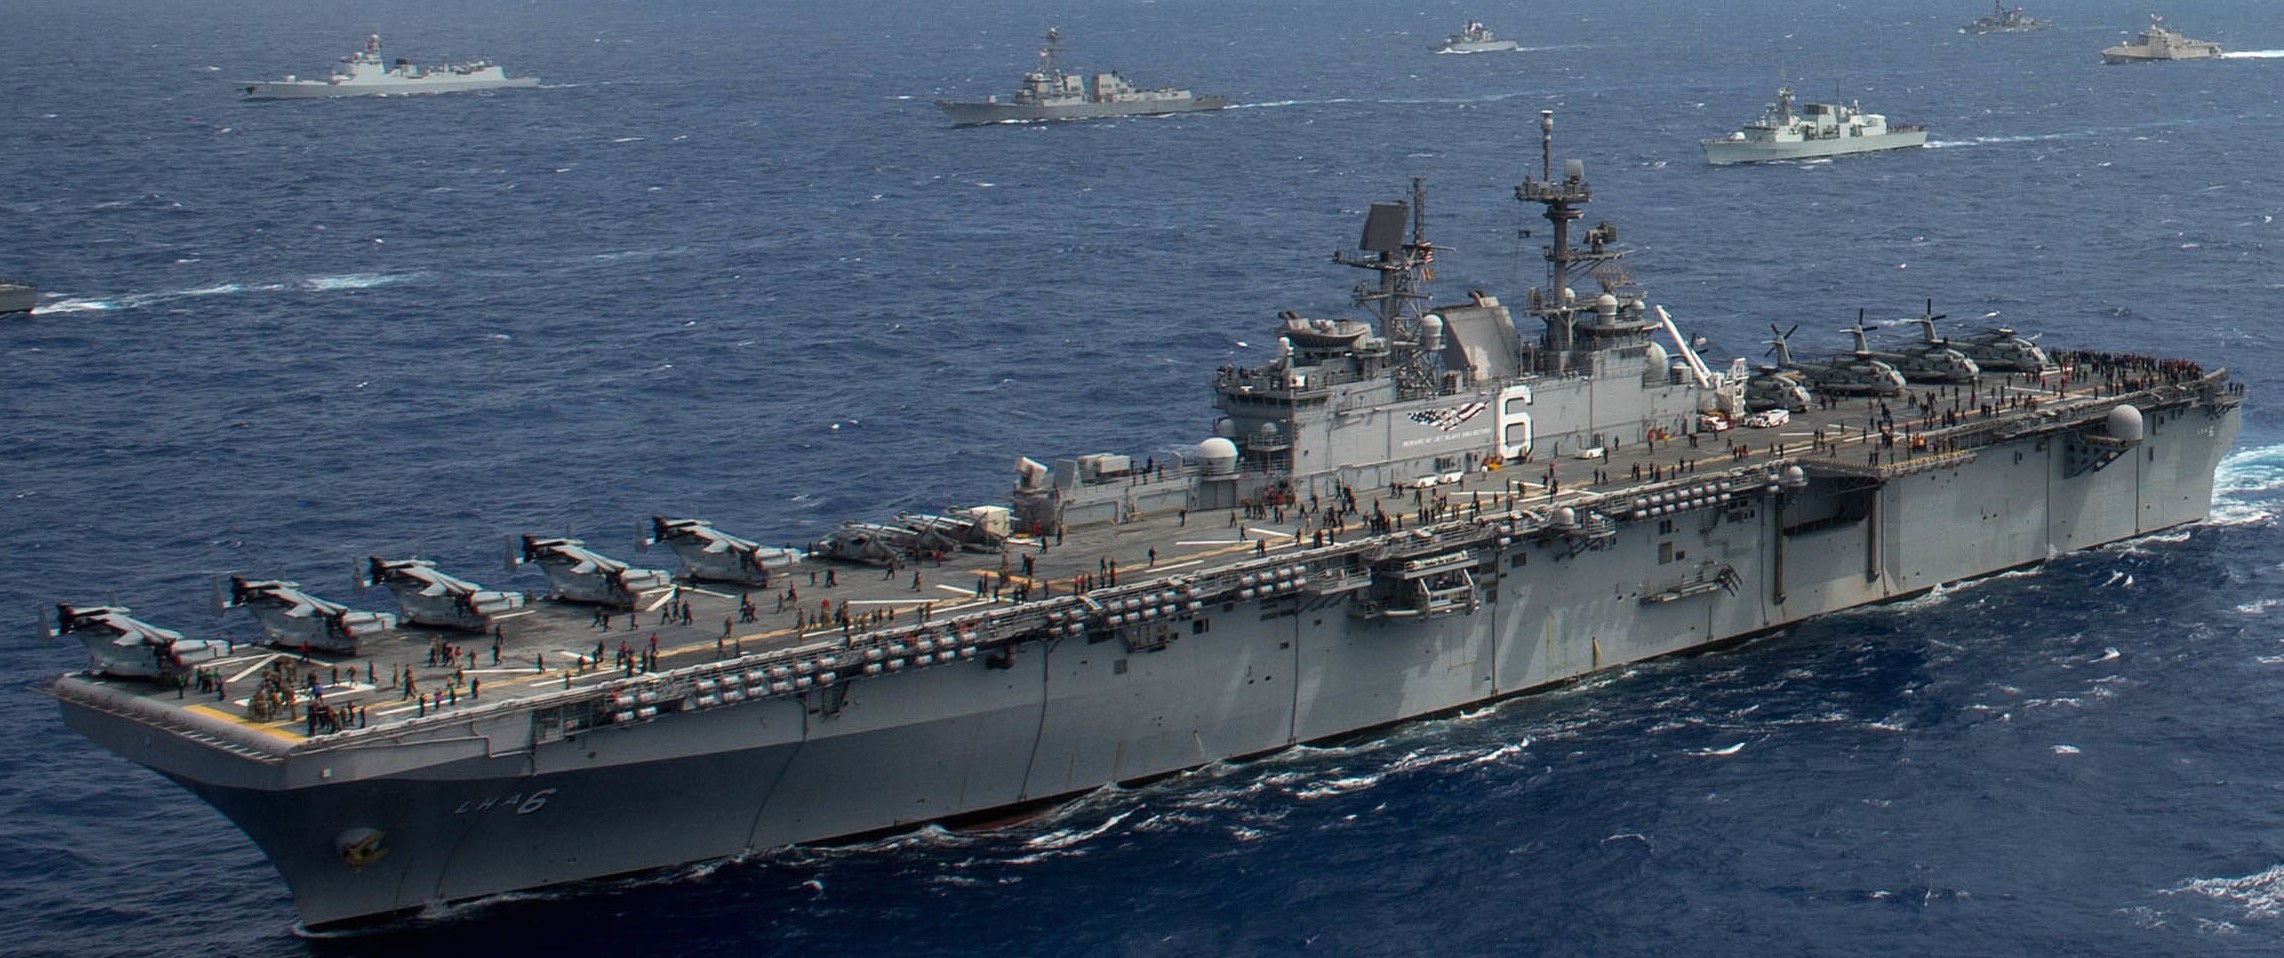 lha-6 uss america amphibious assault ship landing us navy 117 rimpac